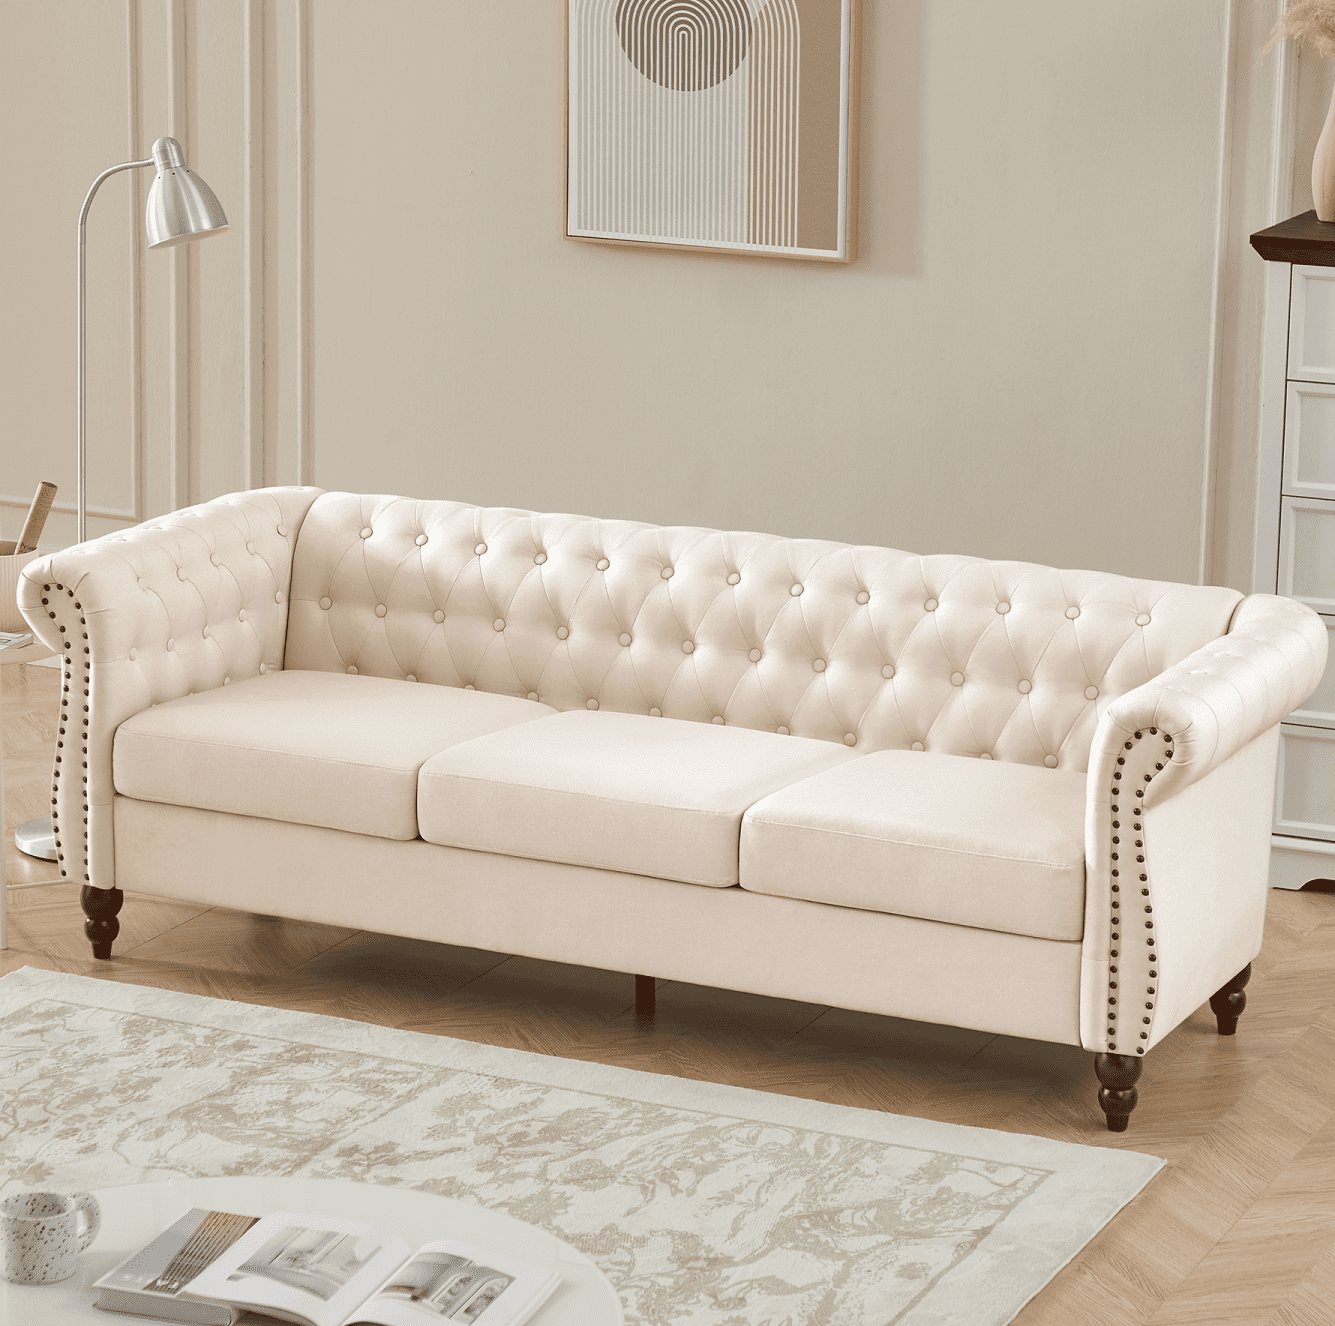 Homfa 3 Seater Linen Fabric Sofa For